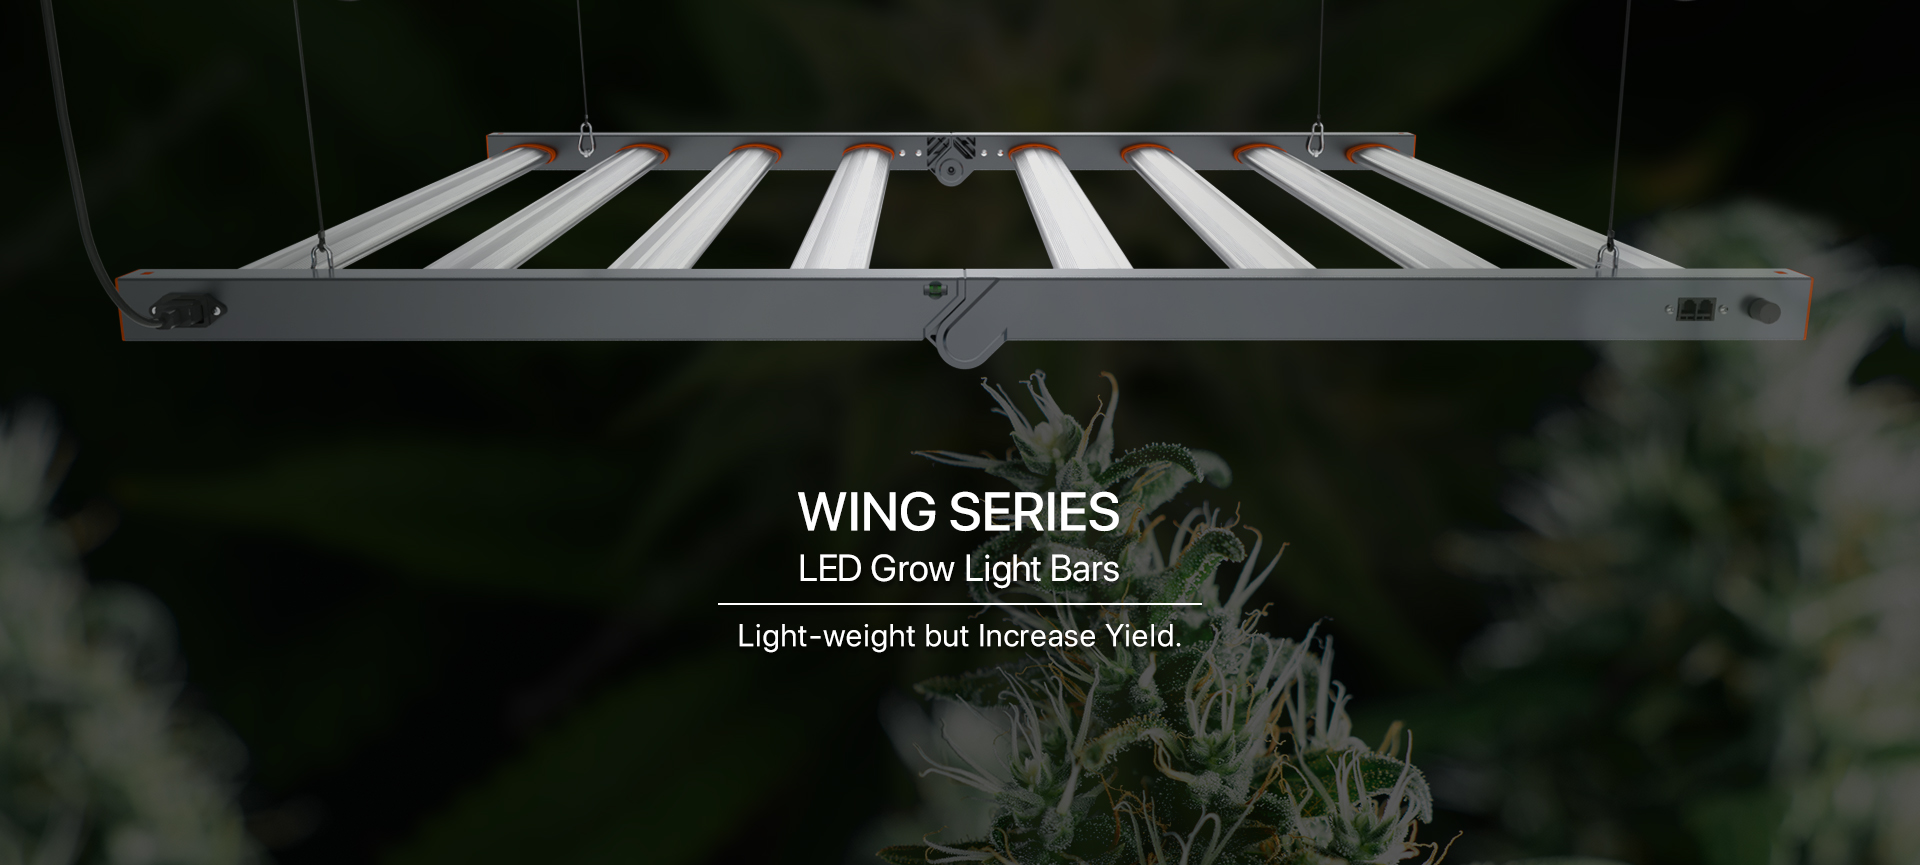 WING series led grow light bars